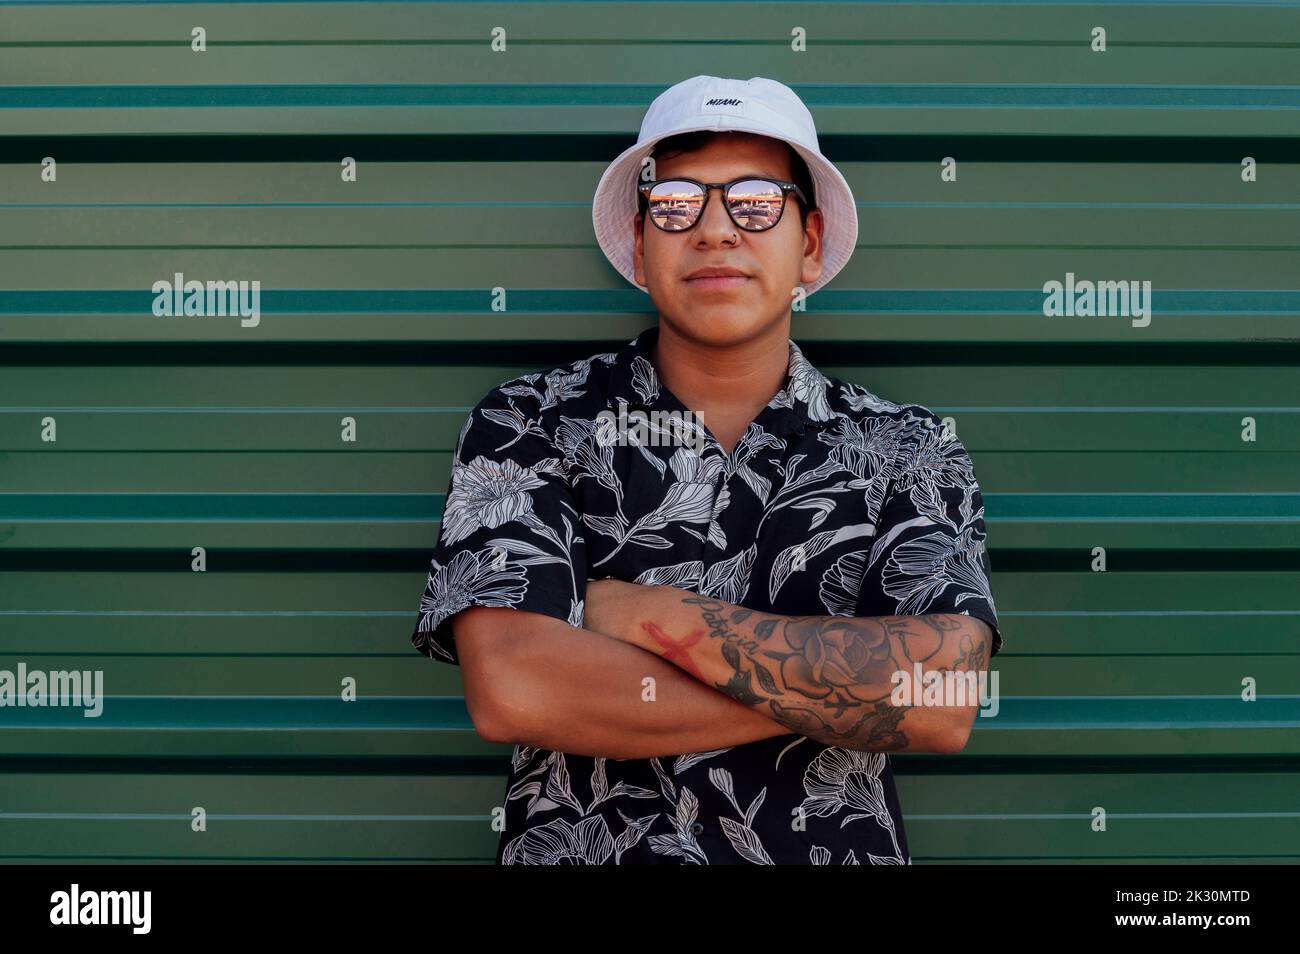 MC Stan Sunglasses Tiger Print